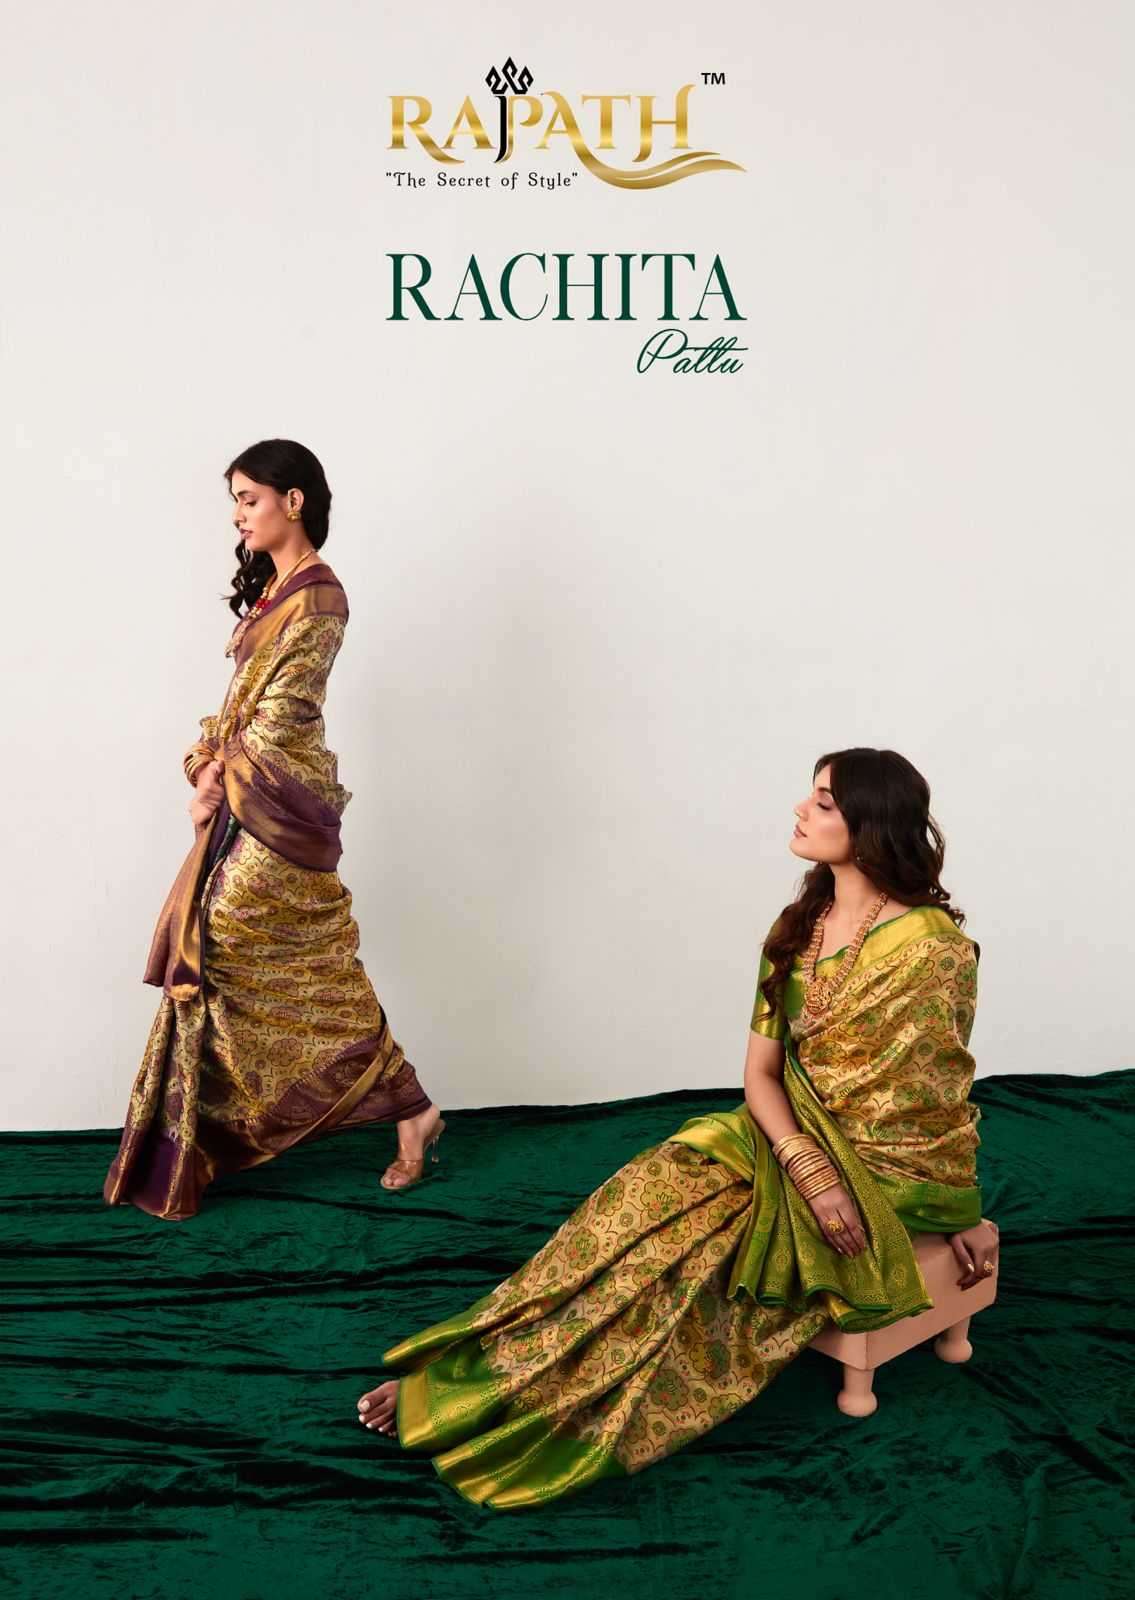 rajpath rachita pattu series 320001-320006 Pure Dharamavaram Silk saree